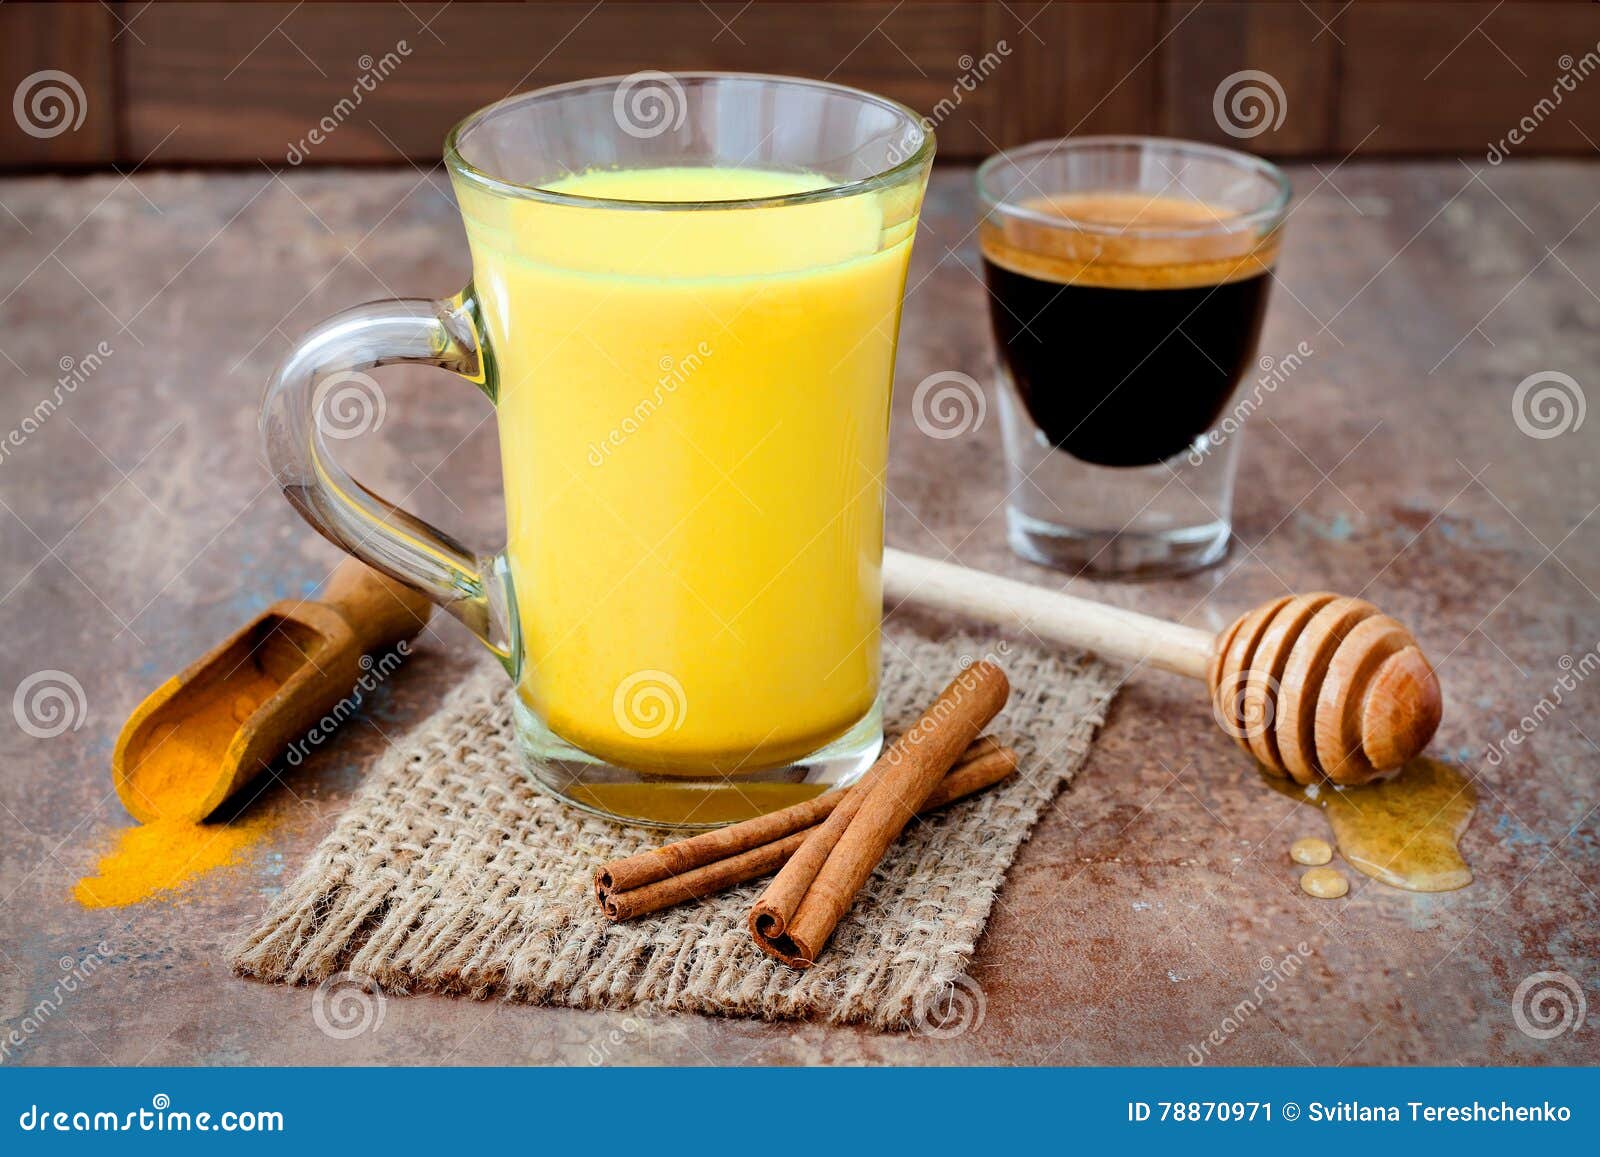 turmeric golden milk latte with cinnamon sticks and honey. detox liver fat burner, immune boosting, anti inflammatory drink